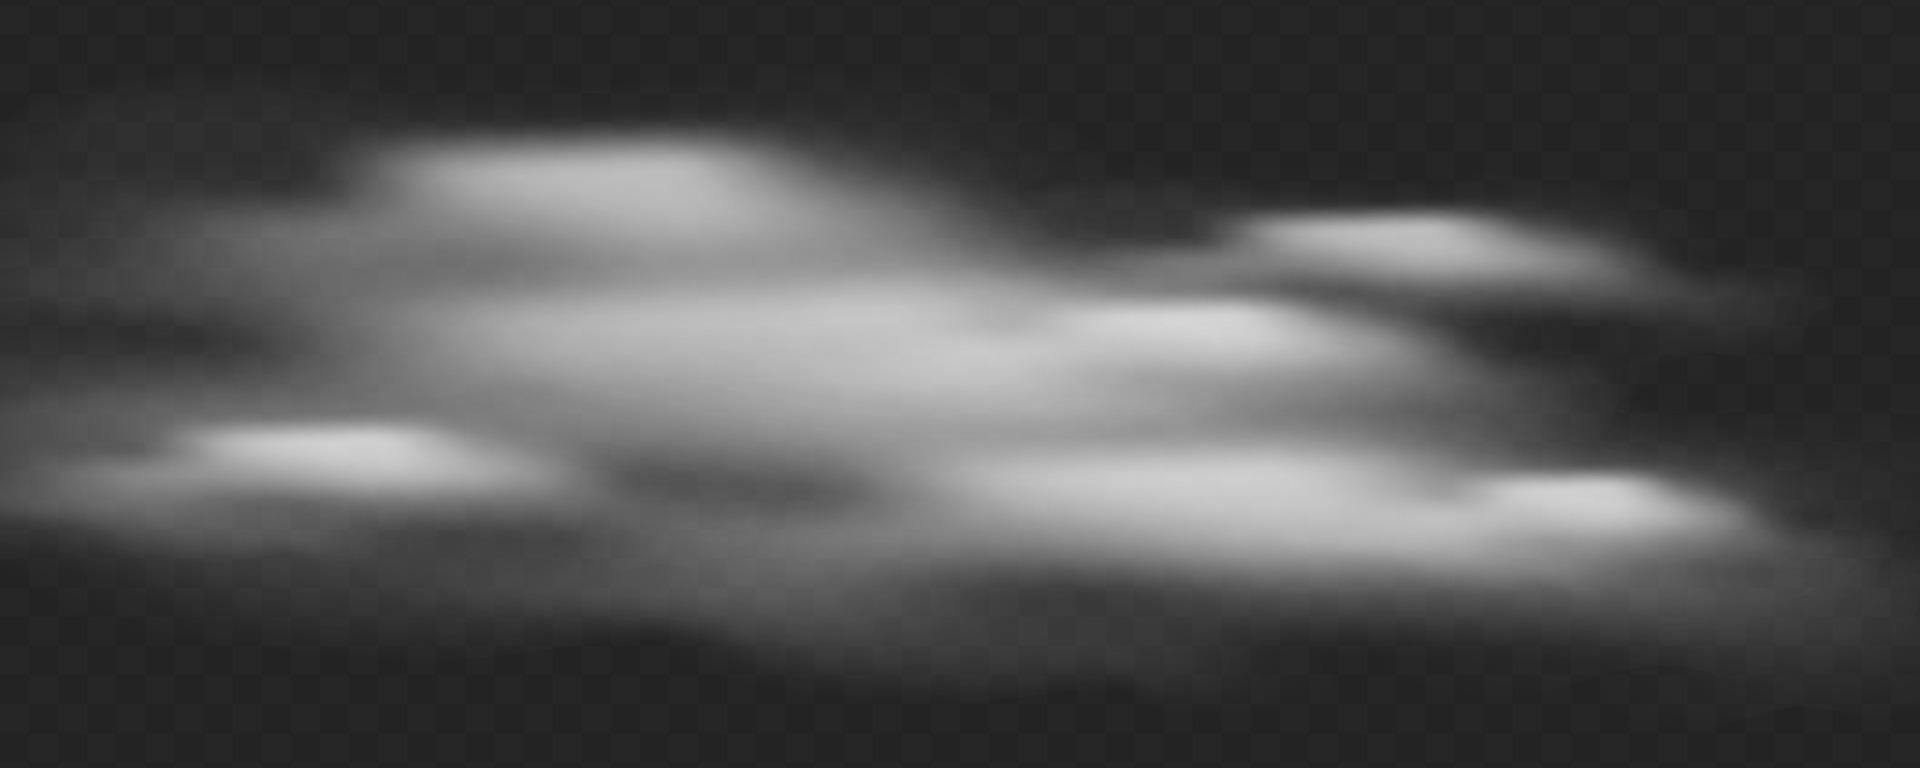 snelheid wolk effect. witte sigarettenrook op horizontale banner. abstract giftig luchtstof vector